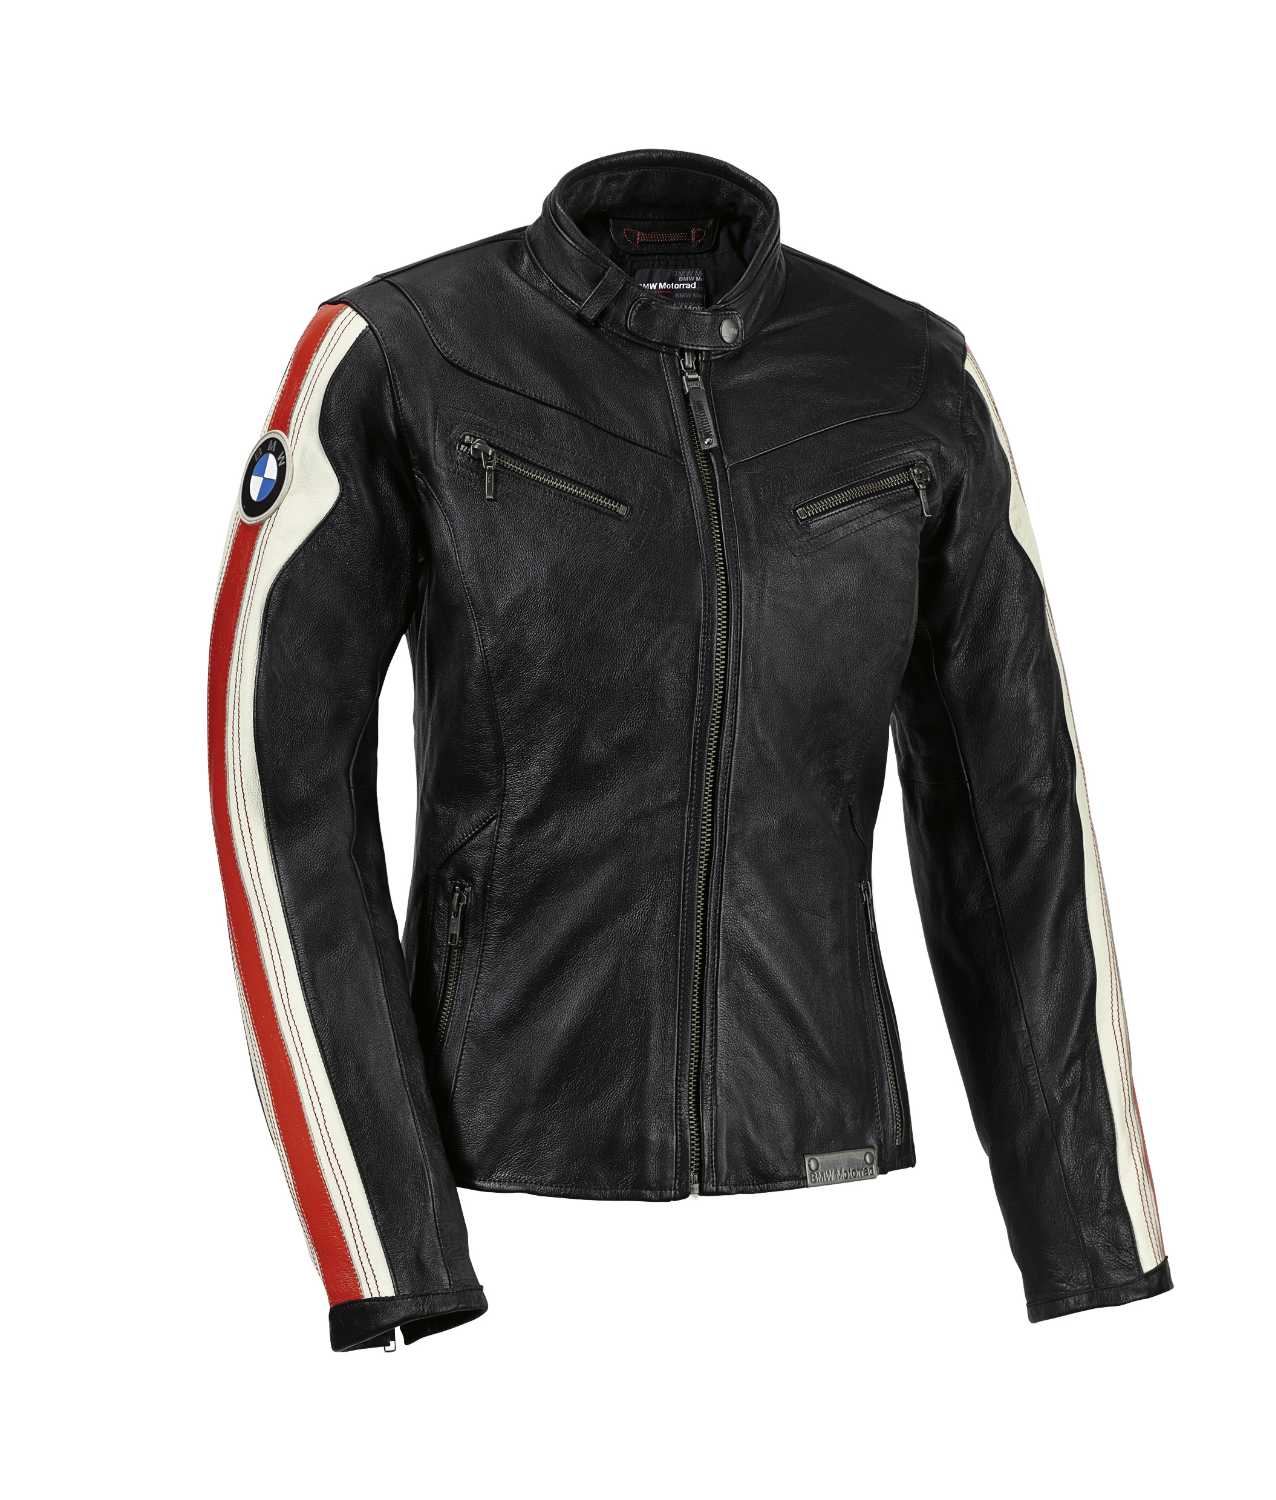 BMW Motorrad rider equipment 2015 Ride. Club leather jacket 